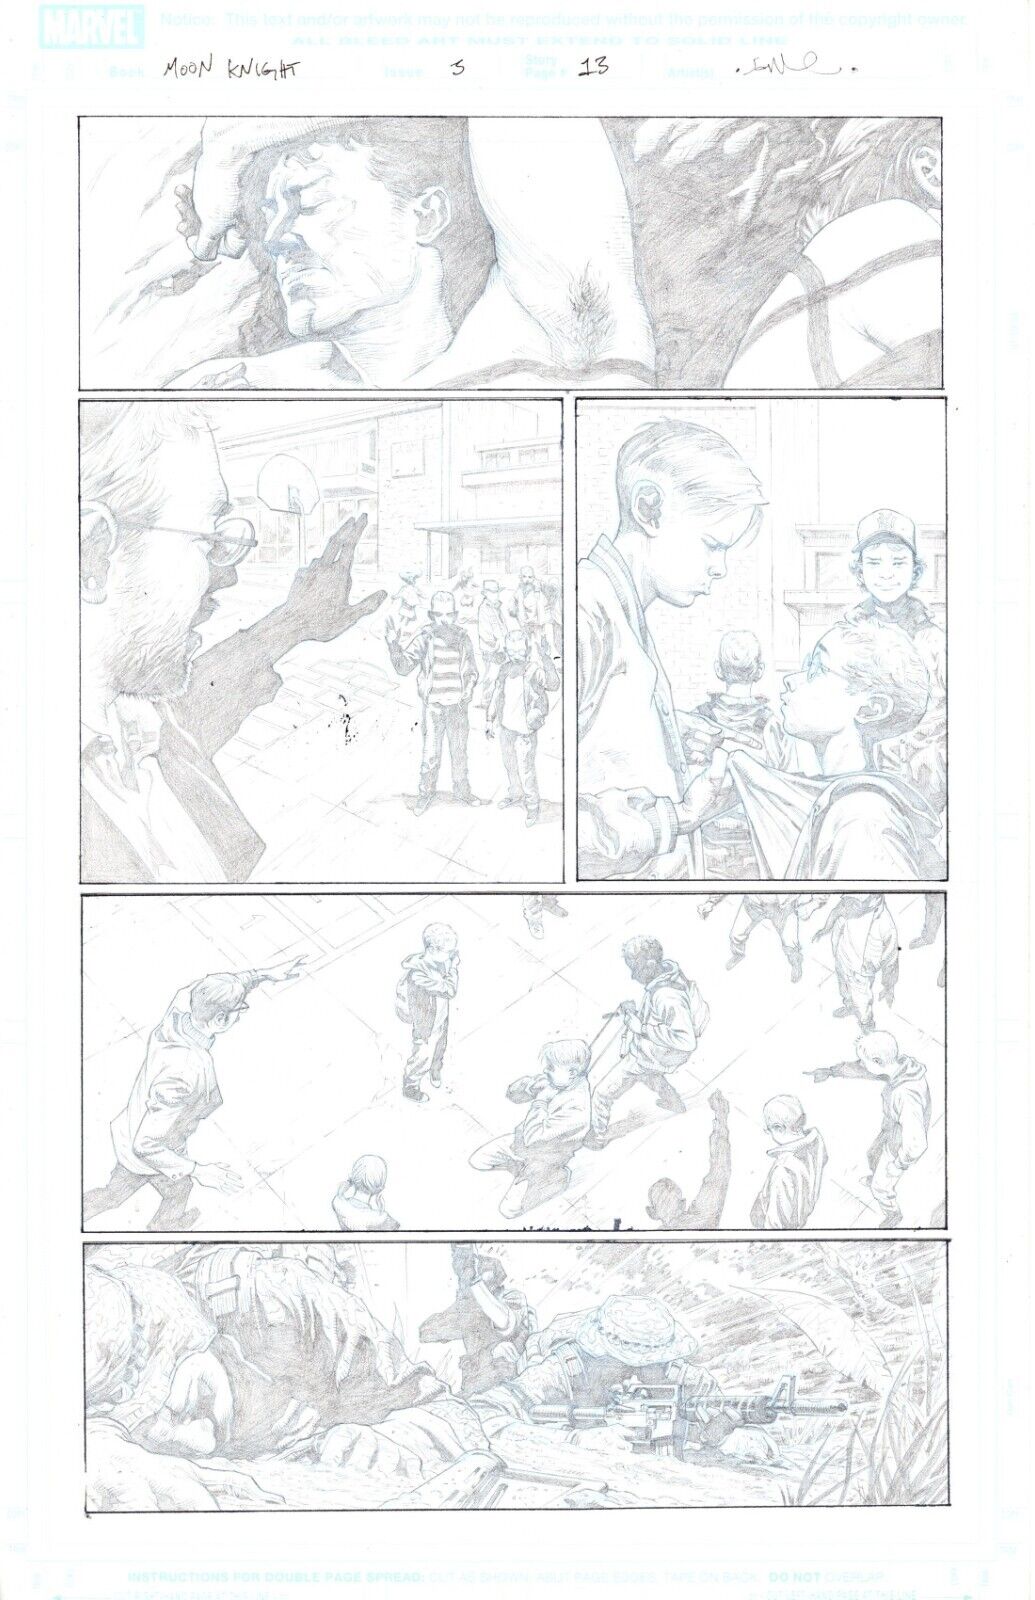 Original JEROME OPENA Comic Book Art VENGEANCE of MOON KNIGHT #3, page 13 Marvel